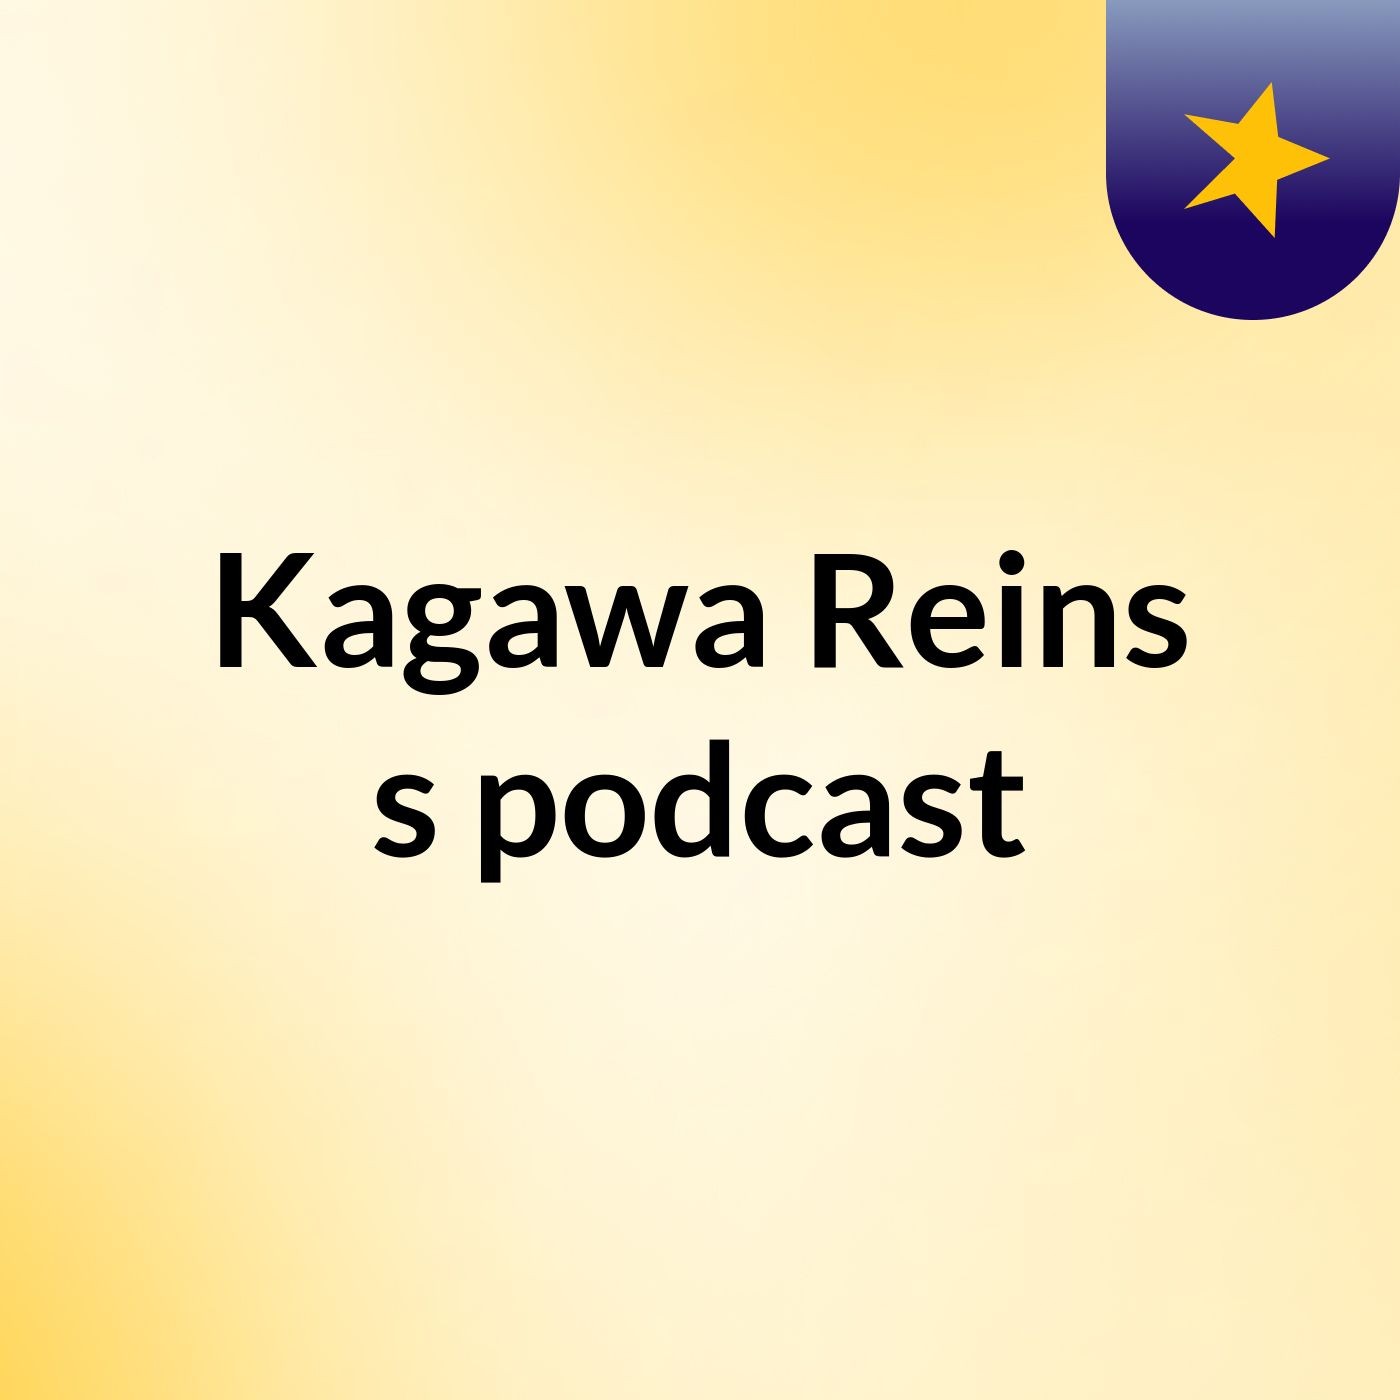 Kagawa Reins's podcast